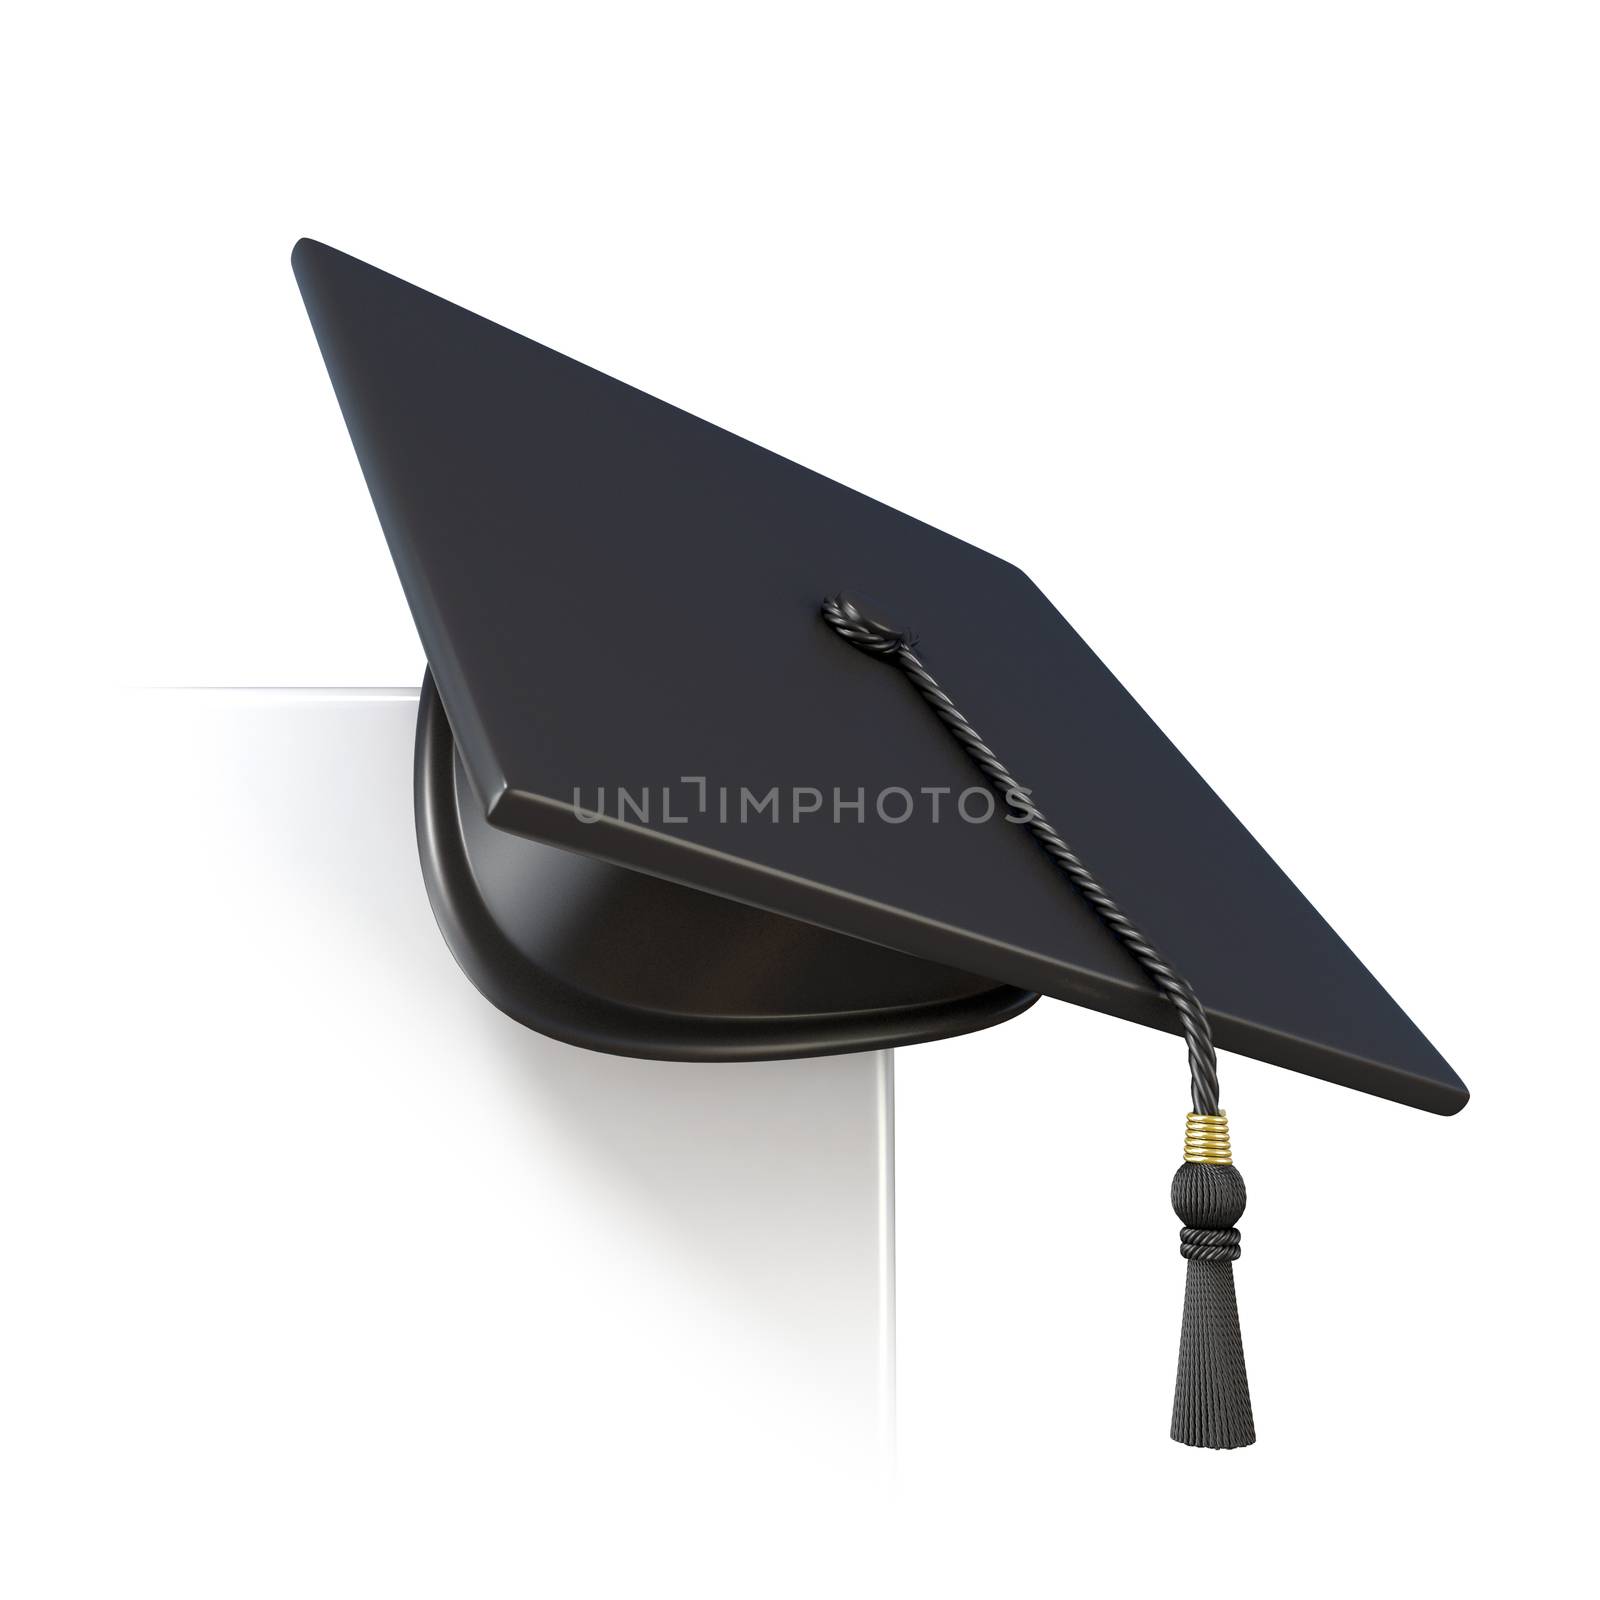 Graduation cap on blank paper corner. 3D render illustration isolated on white background